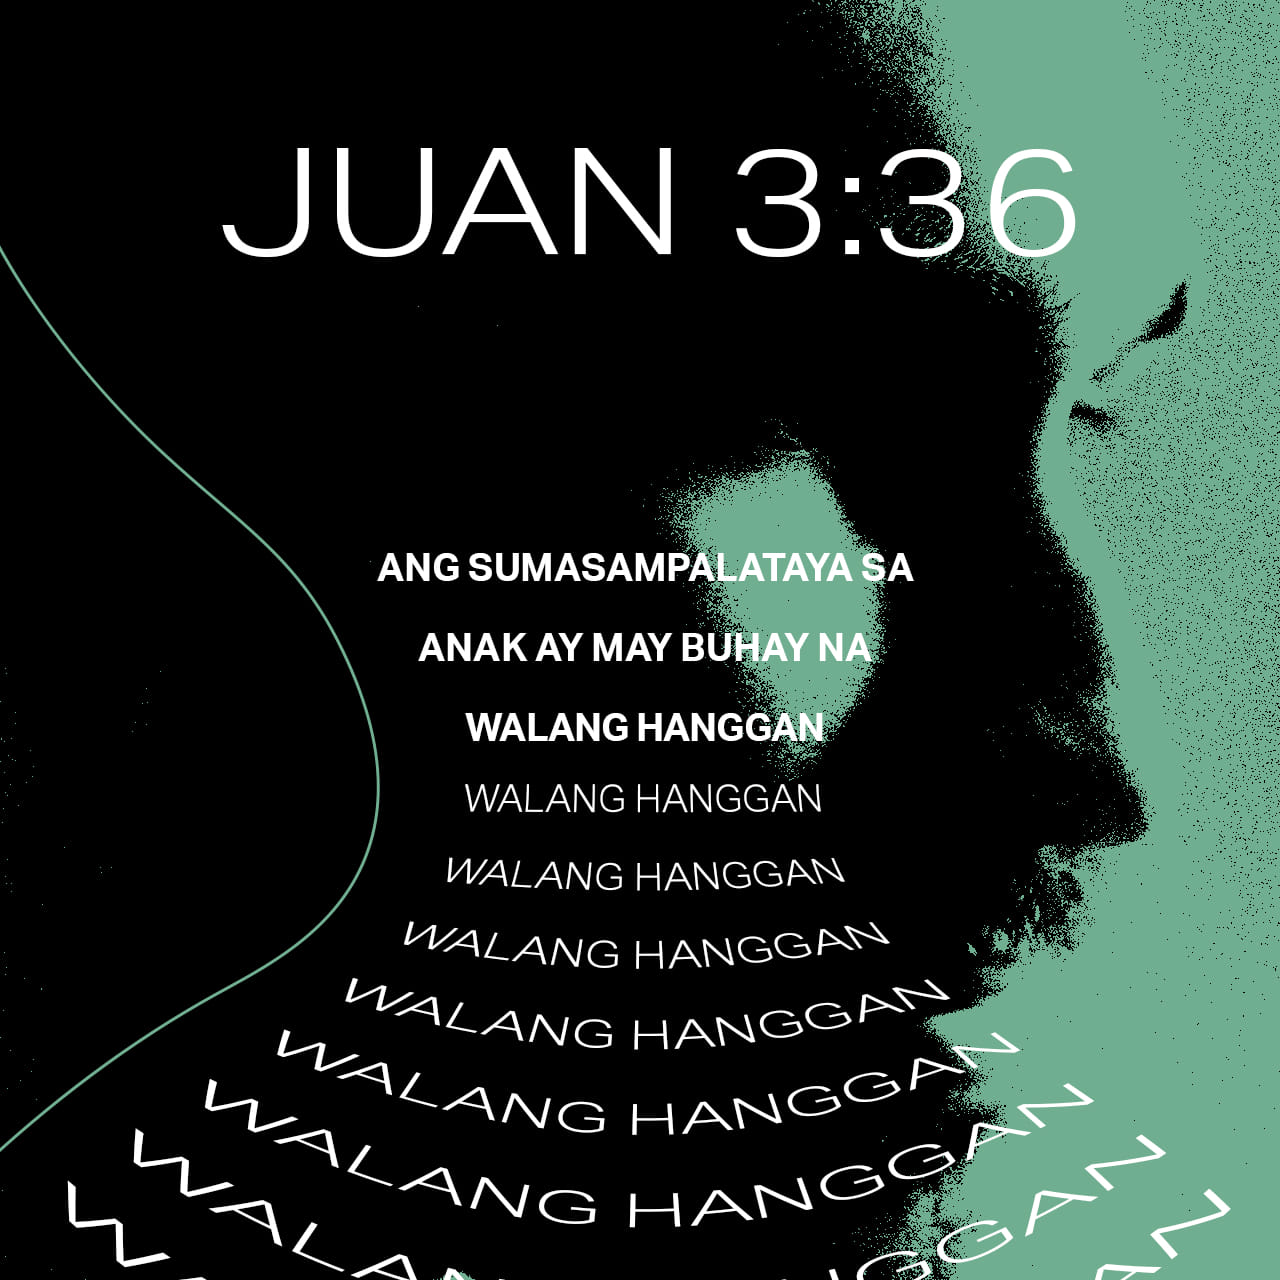 Juan 3:36